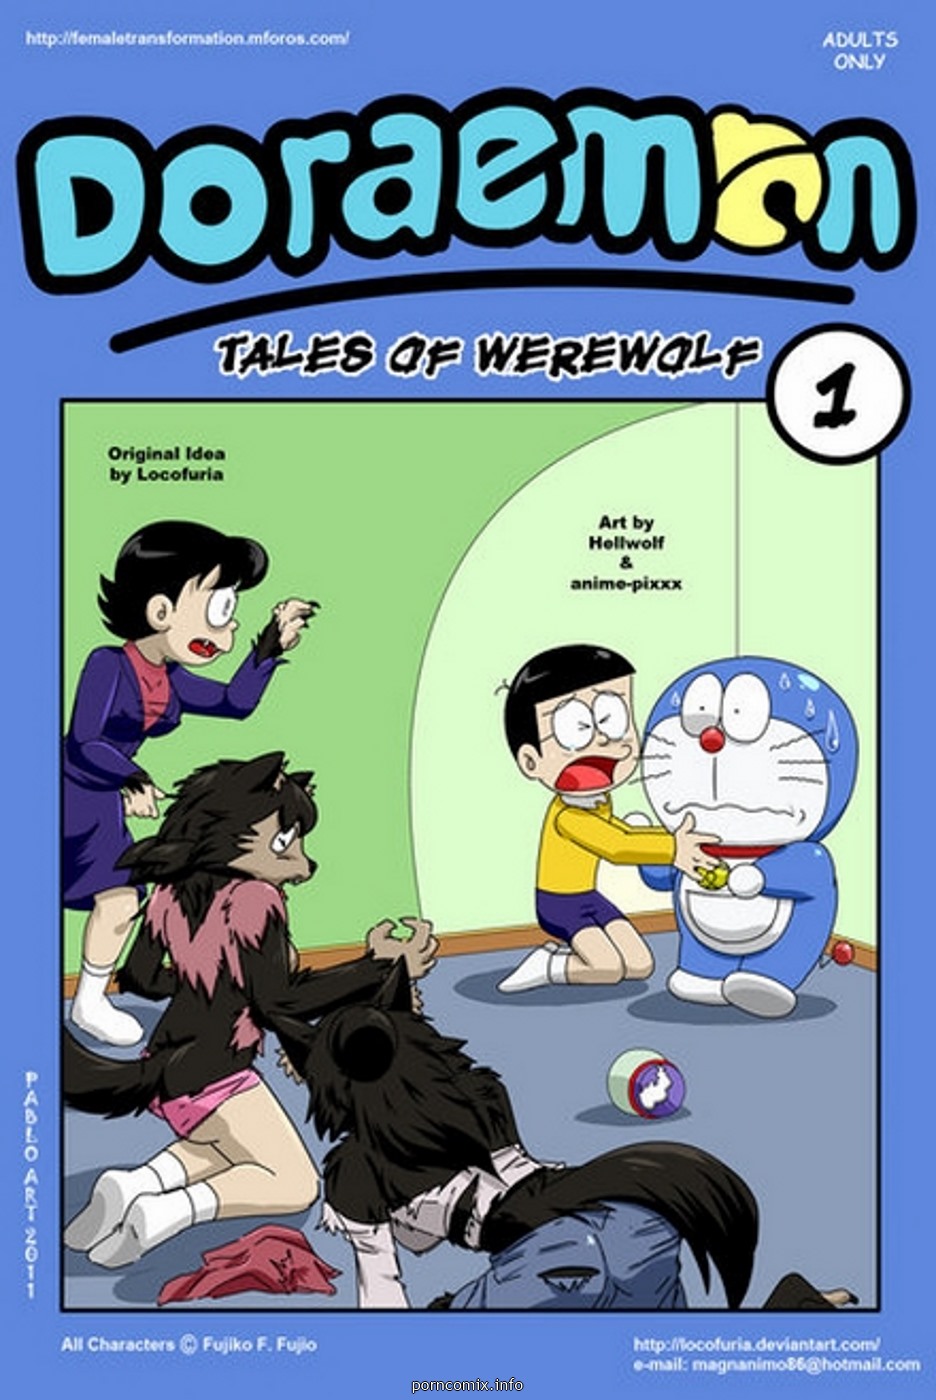 Hot Sex Of Cartoon Doraemon - Doraemon- Tales of Werewolf - Porn Cartoon Comics